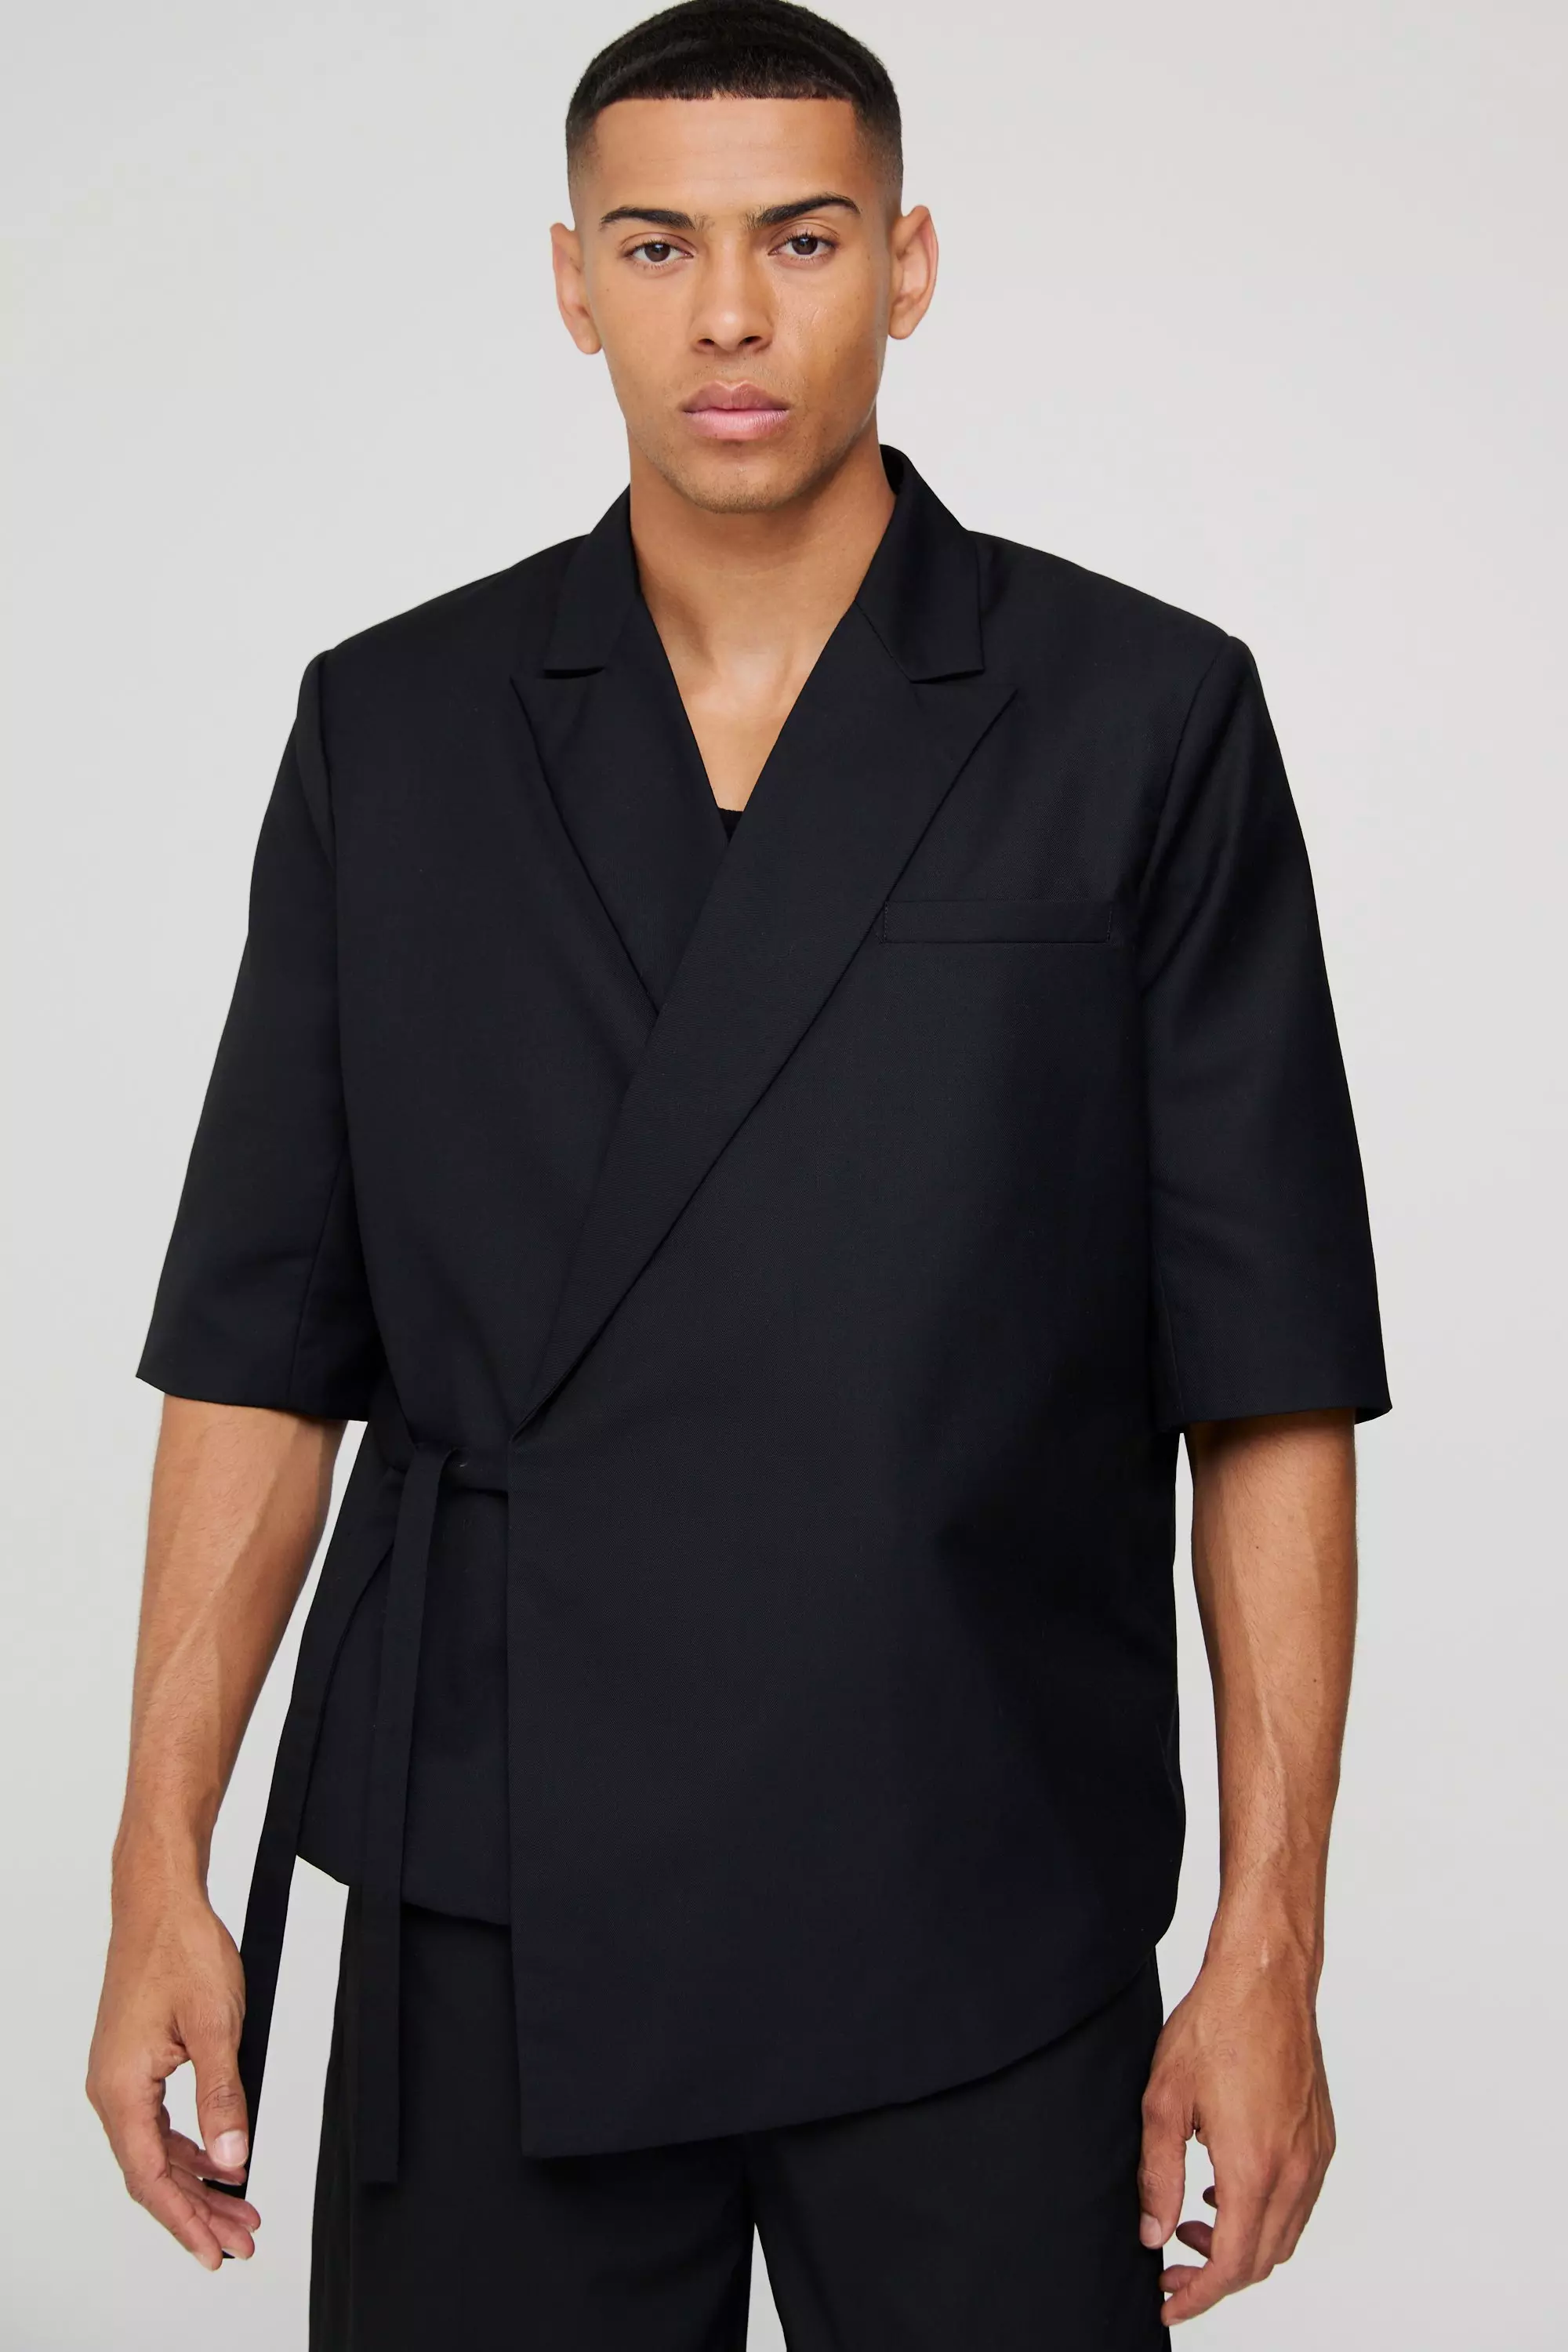 Black Short Sleeve Tie Side Overized Blazer